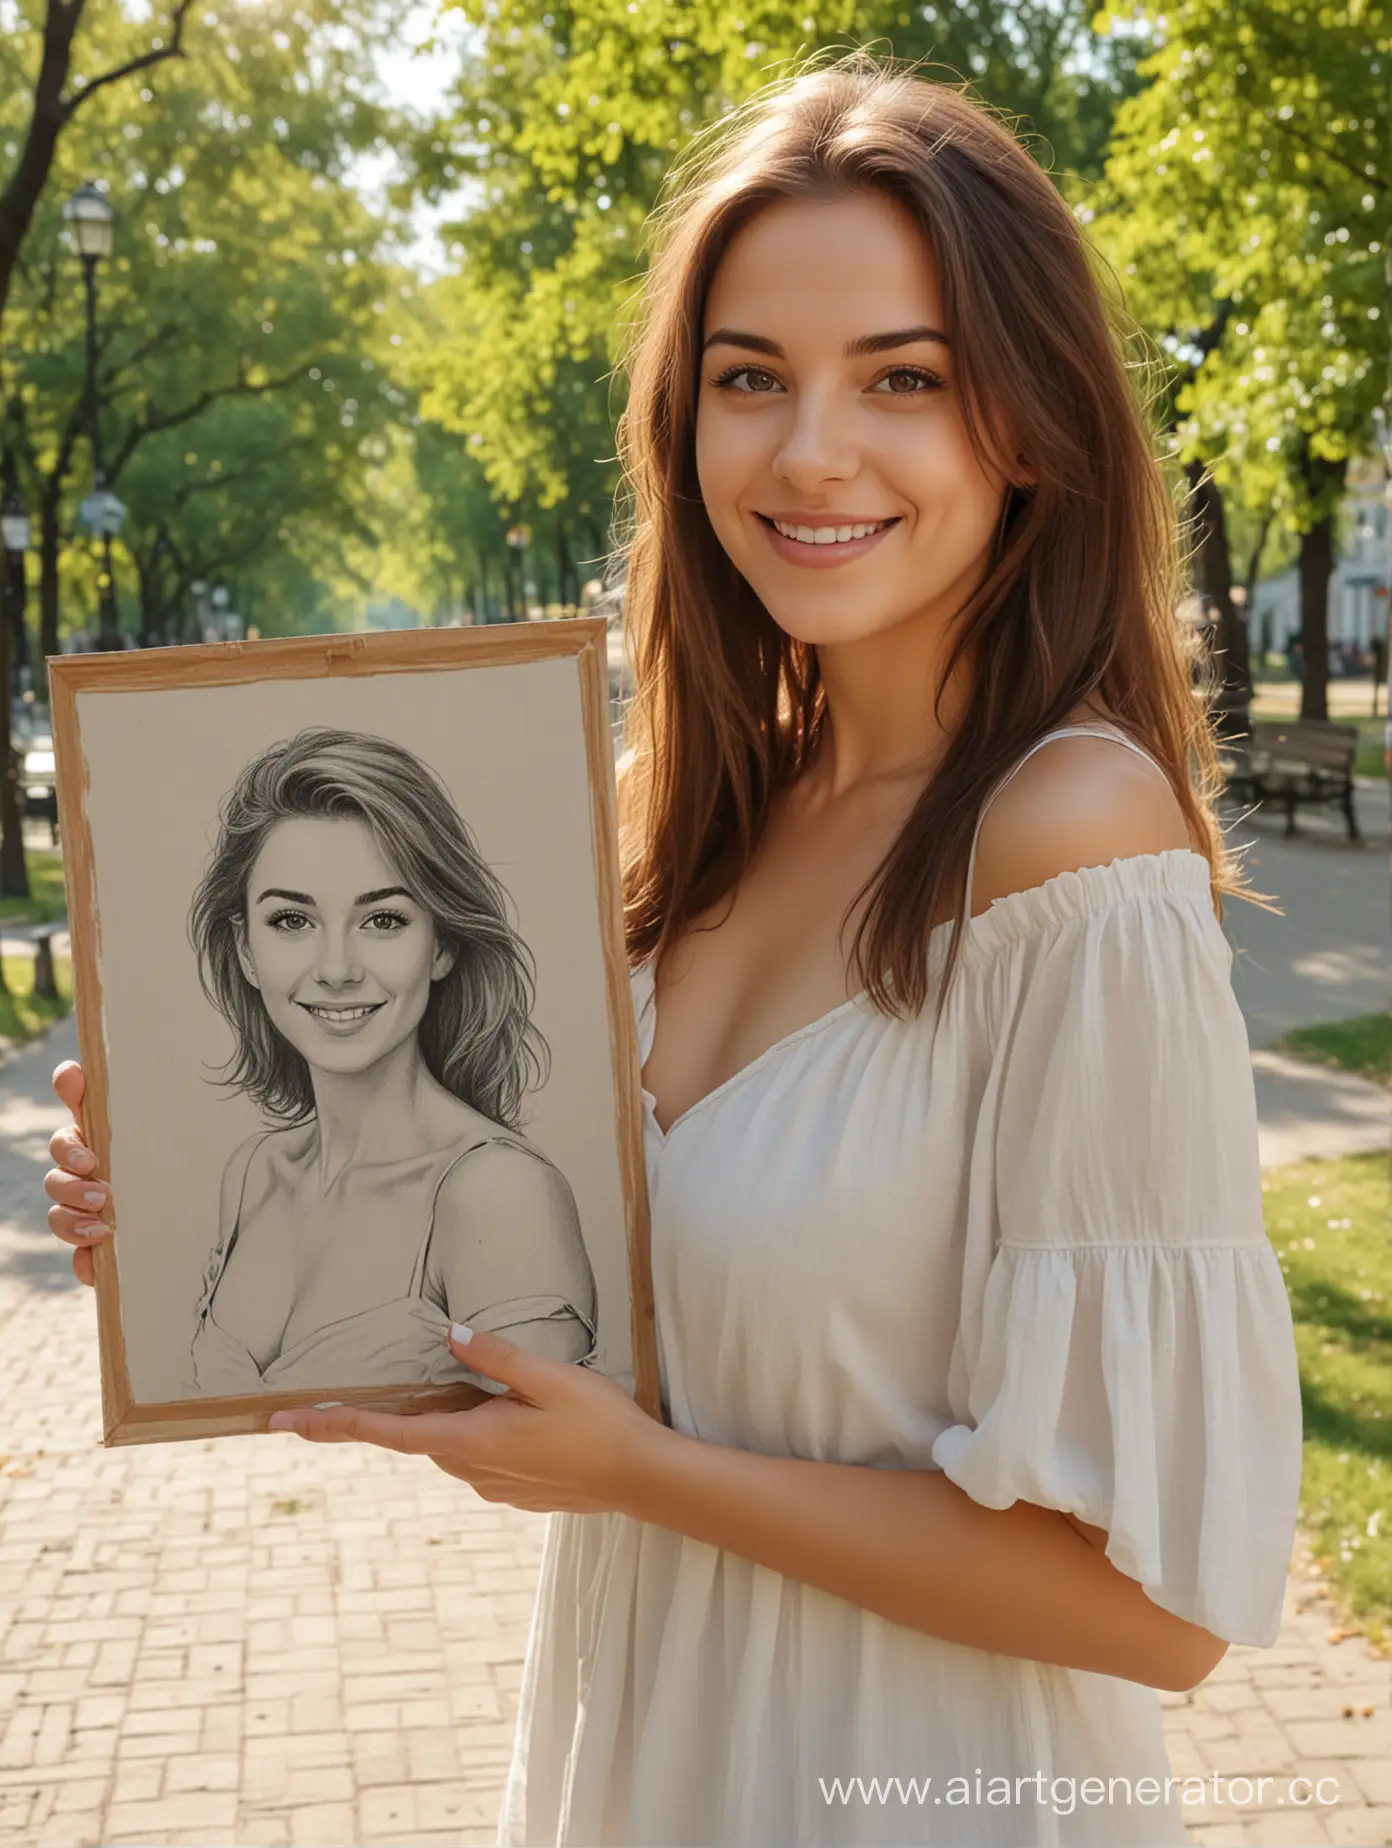 Joyful-Woman-Holding-Realistic-Portrait-Canvas-Outdoors